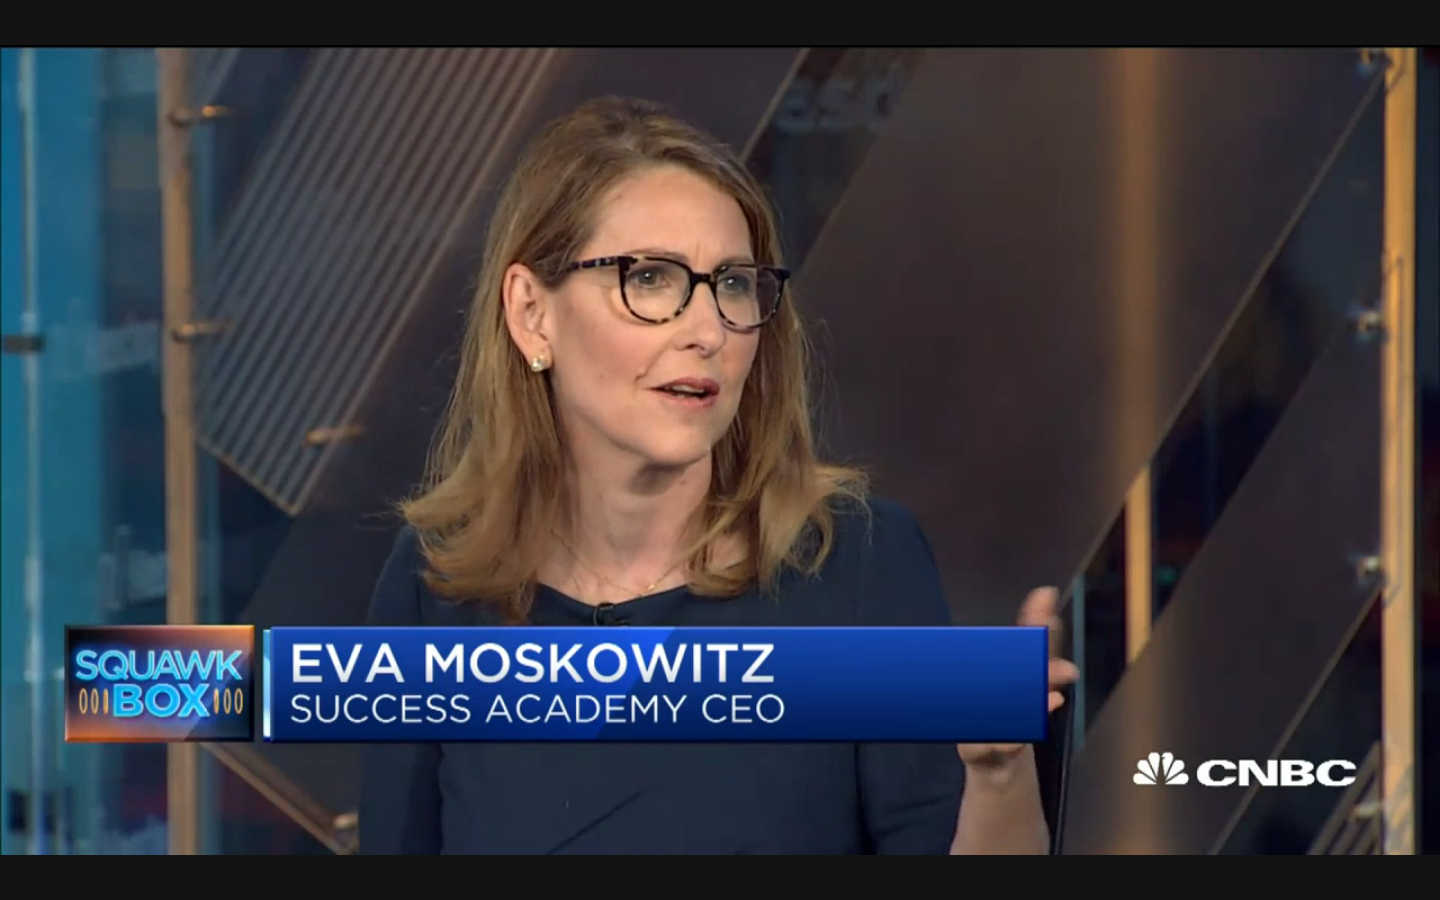 Eva Moscowitz on CNBC: Squawk Box